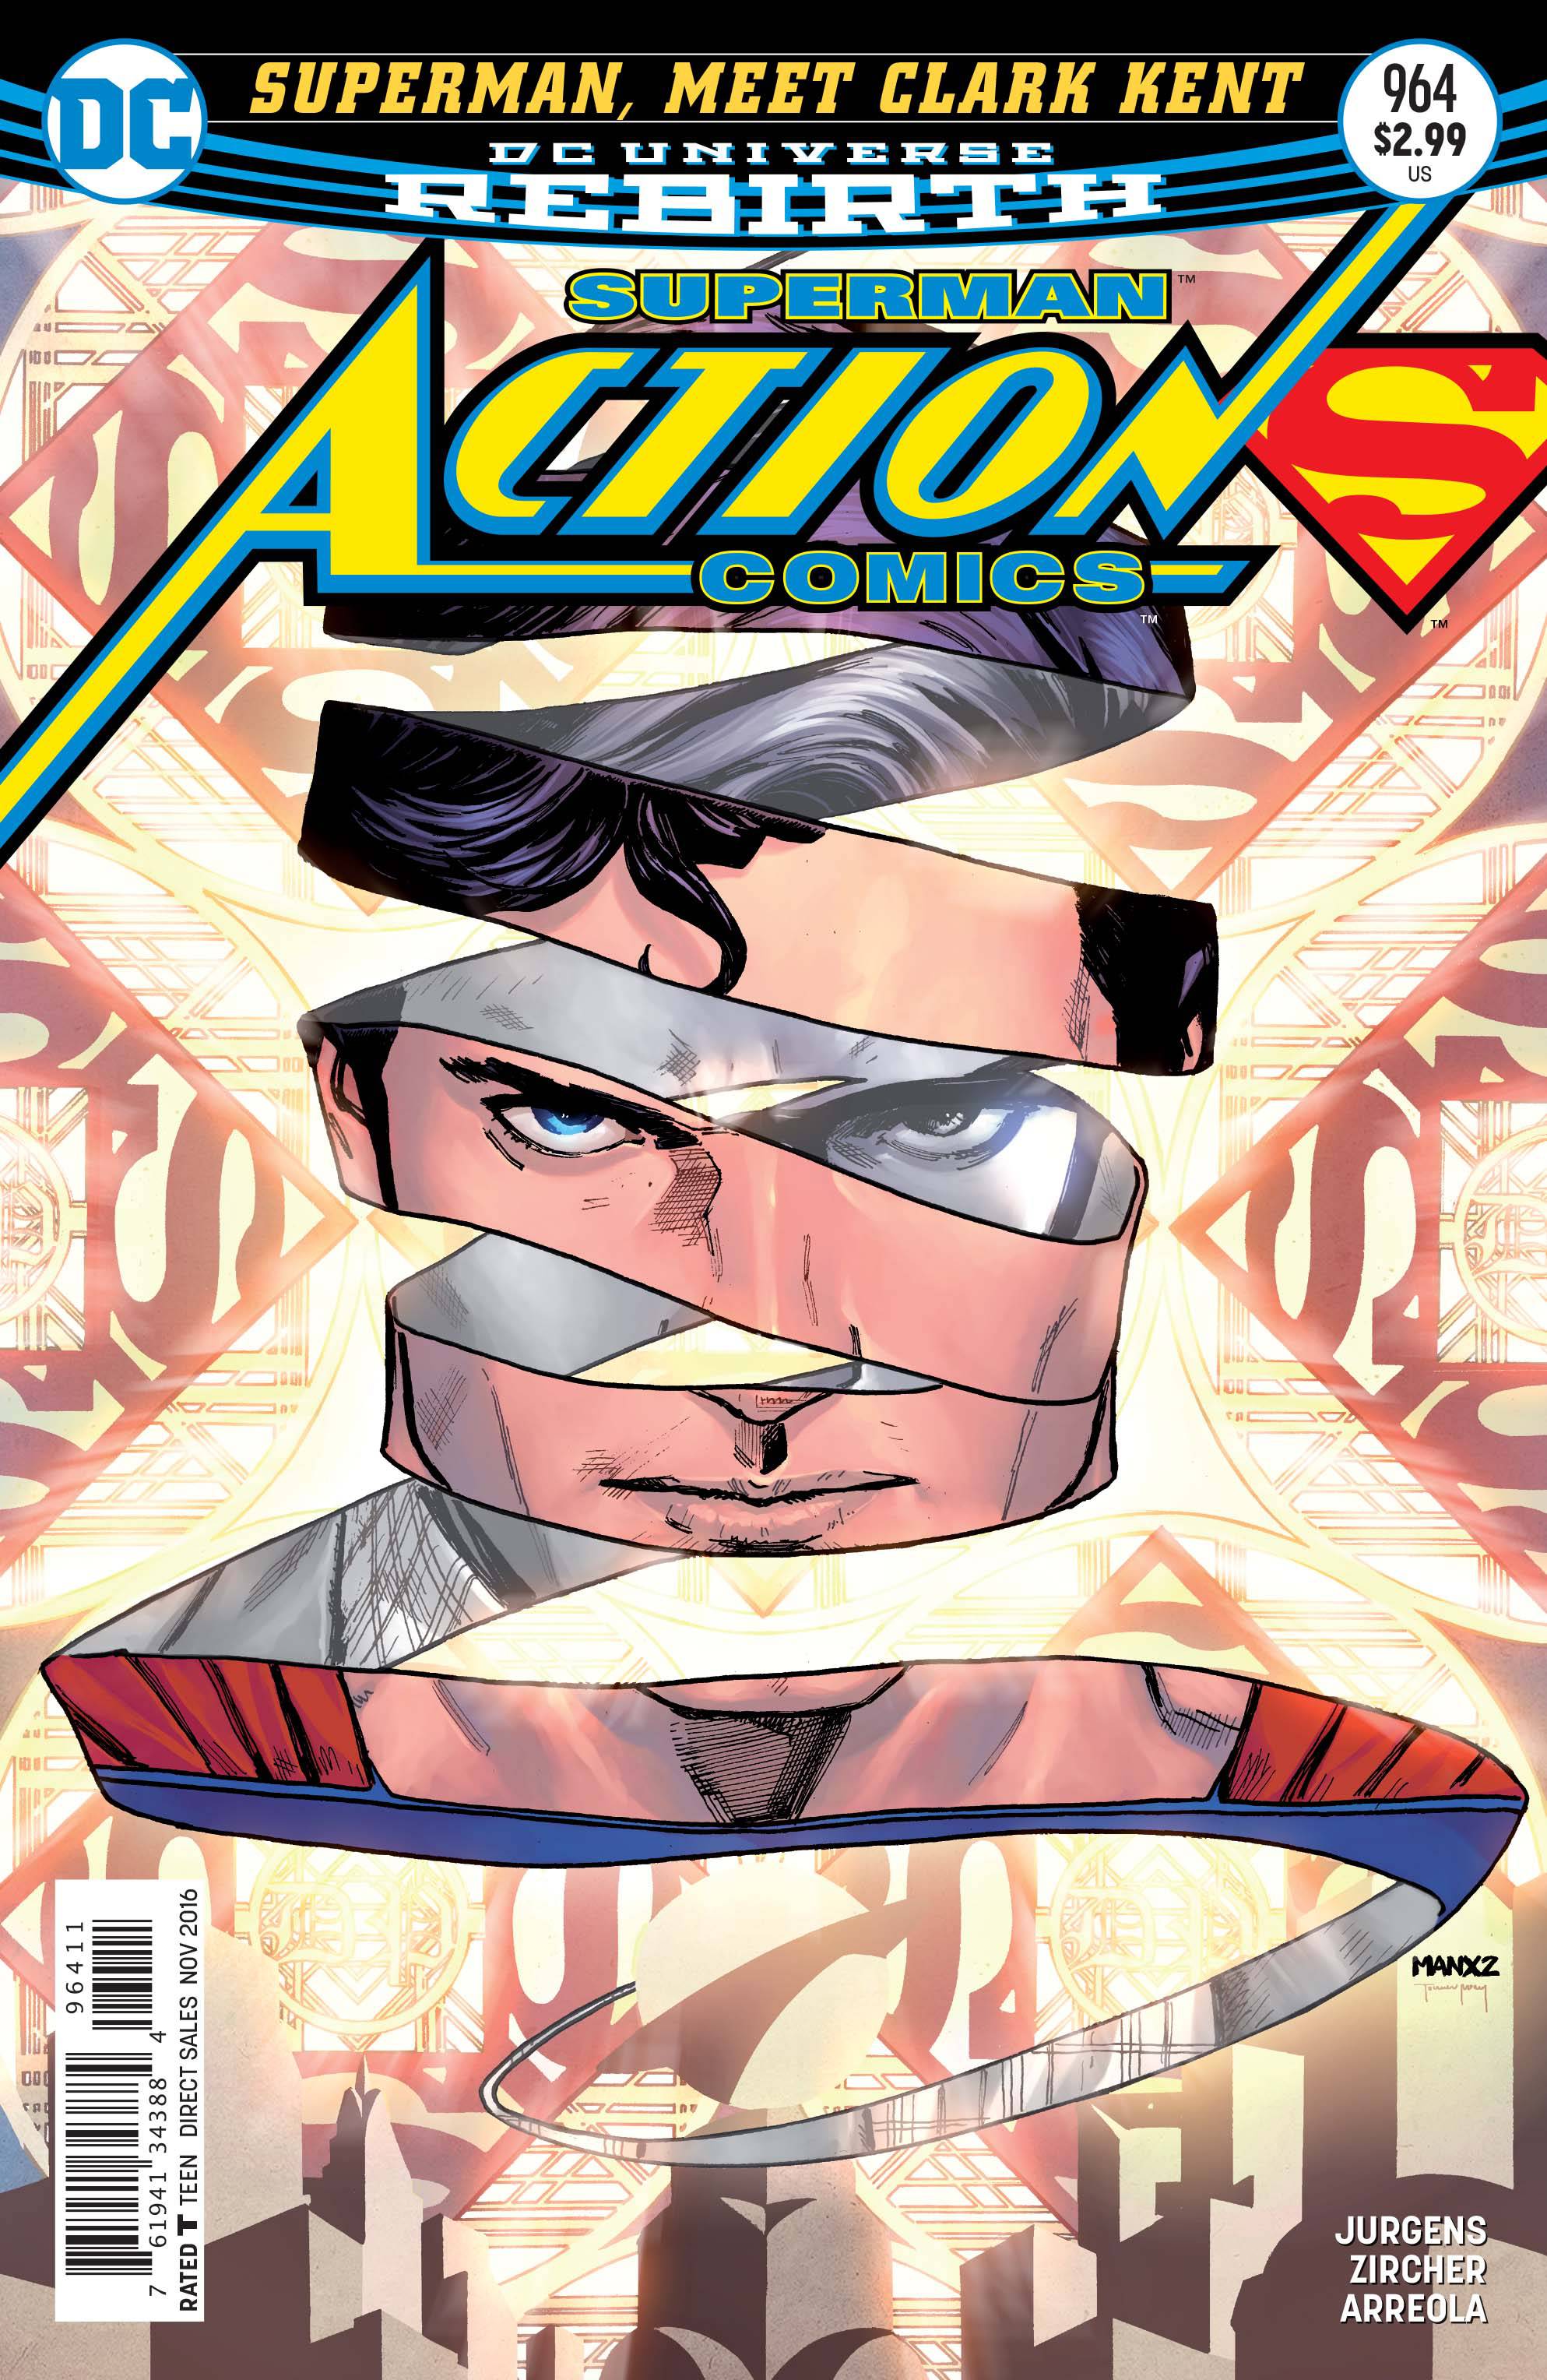 Action Comics comic issue 964